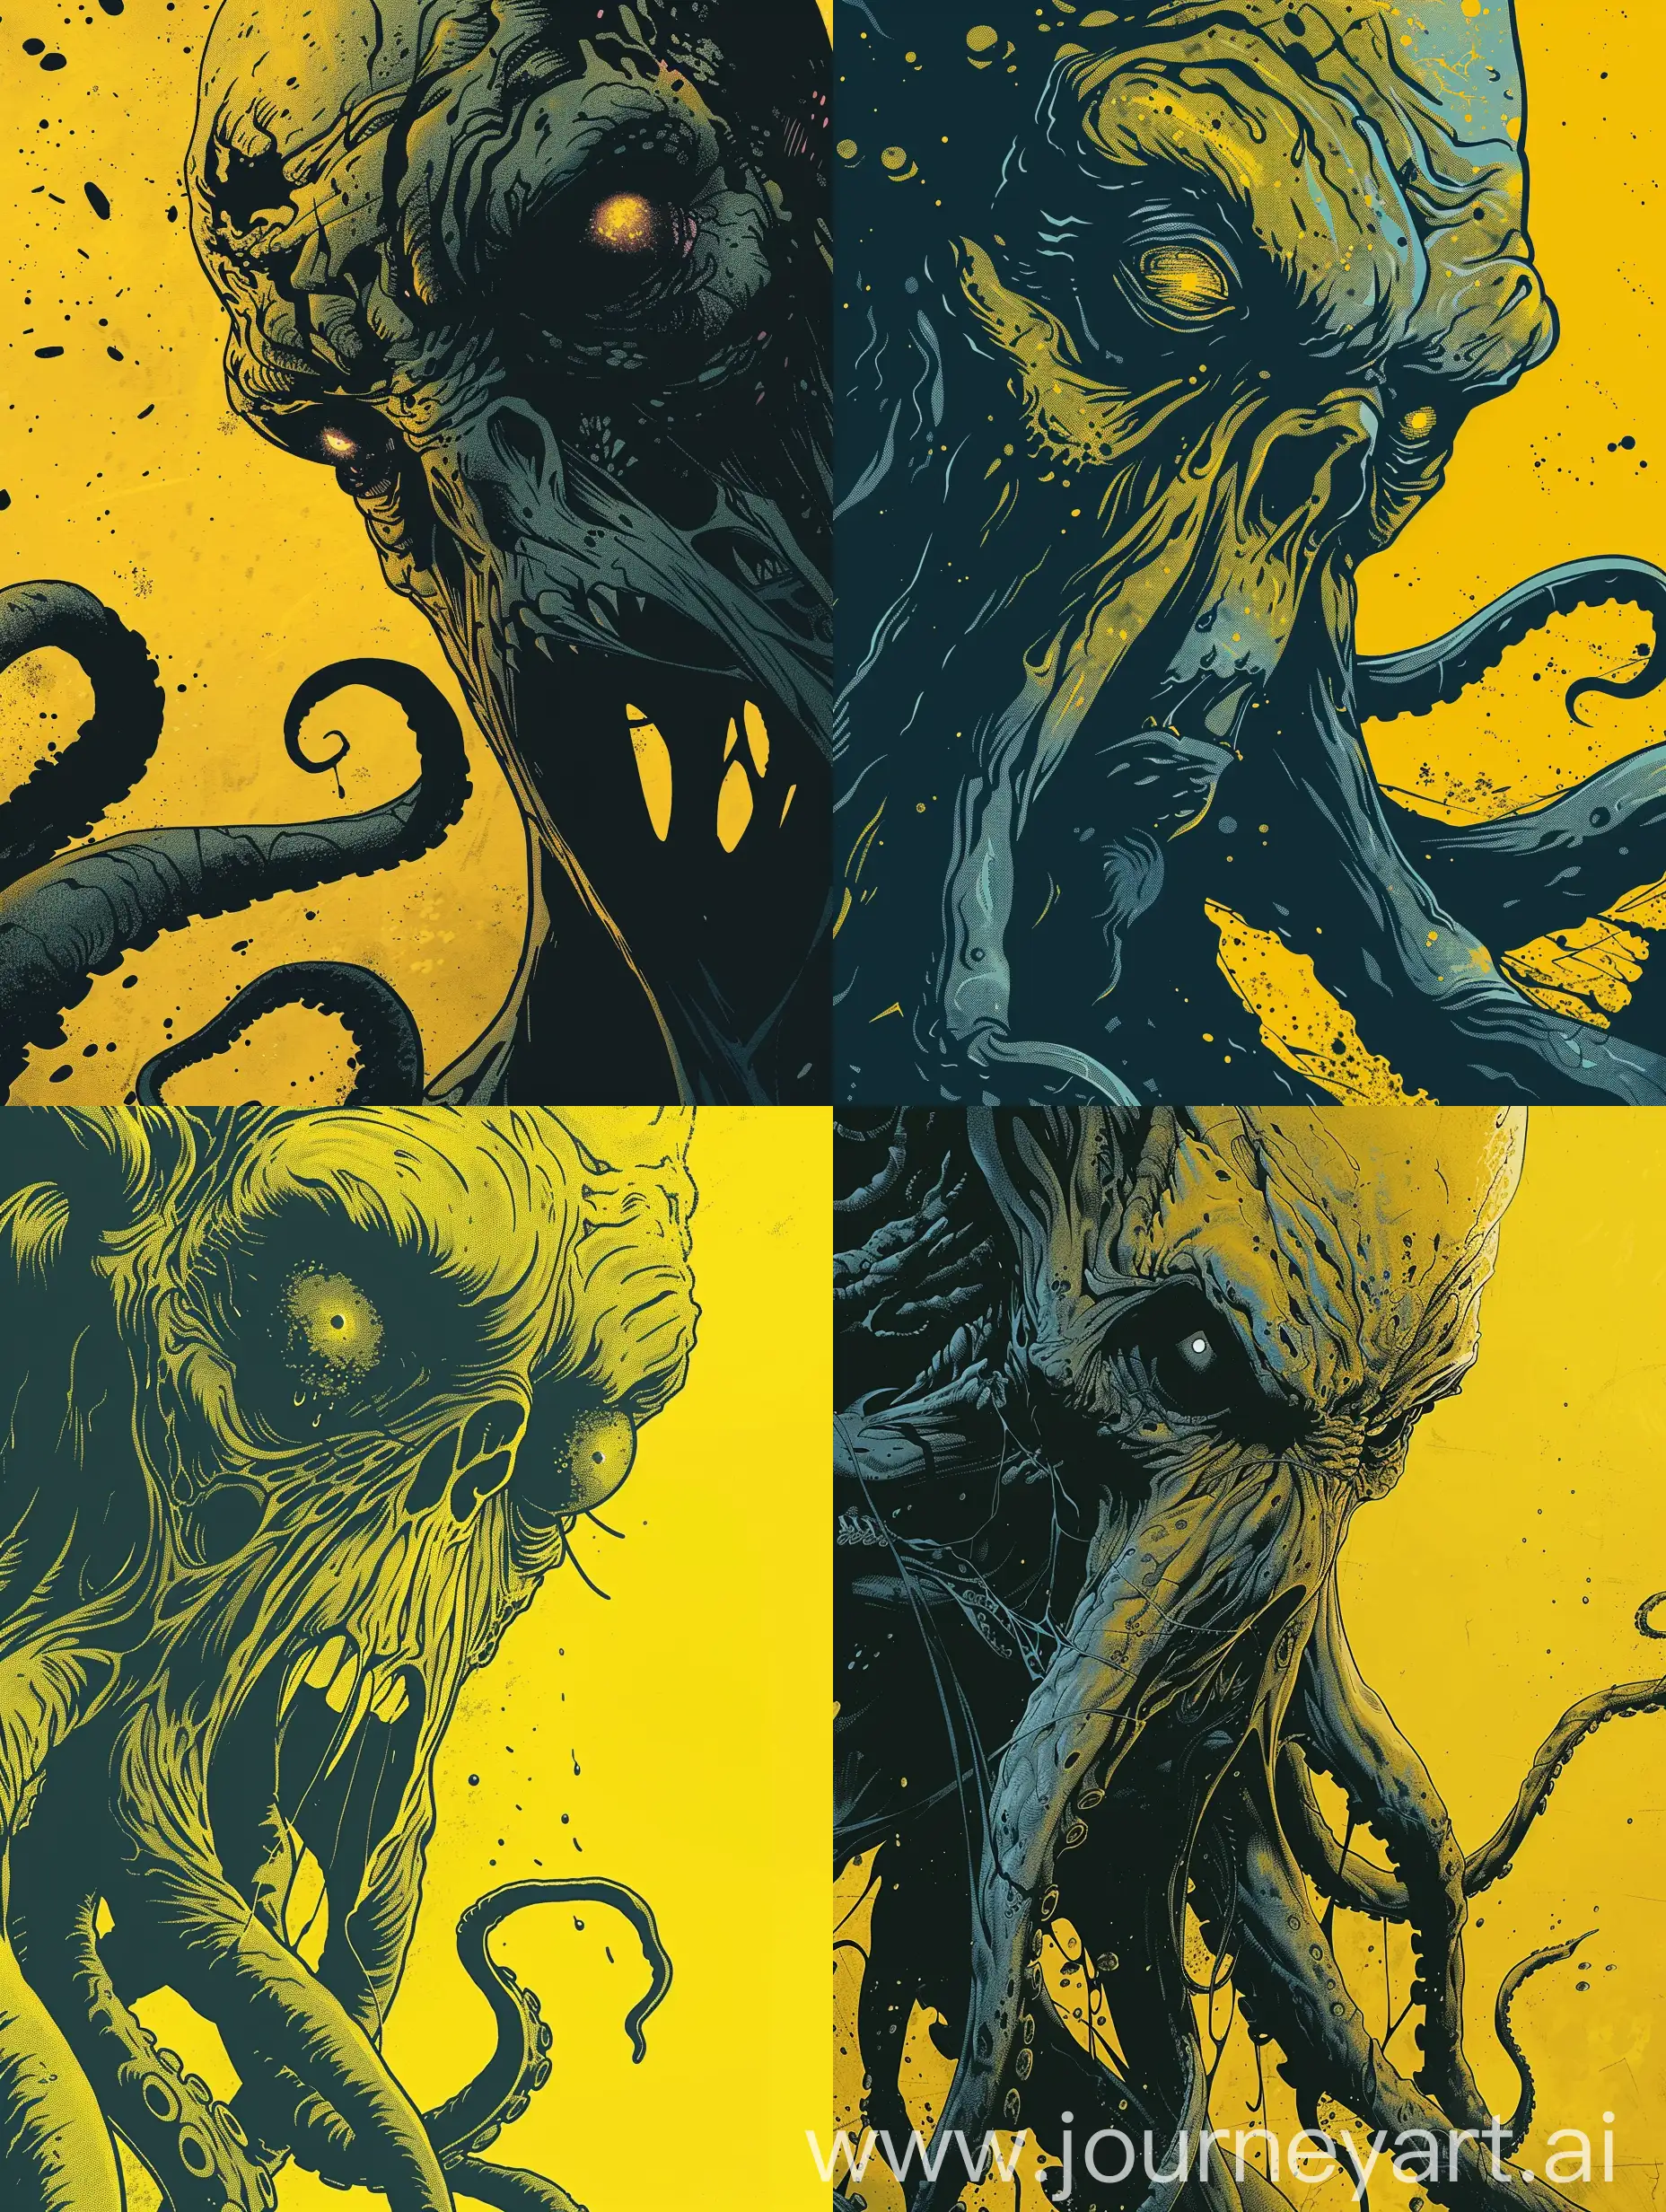 closeup of creepy lovecraftian entity, on a vivid yellow background, comics style